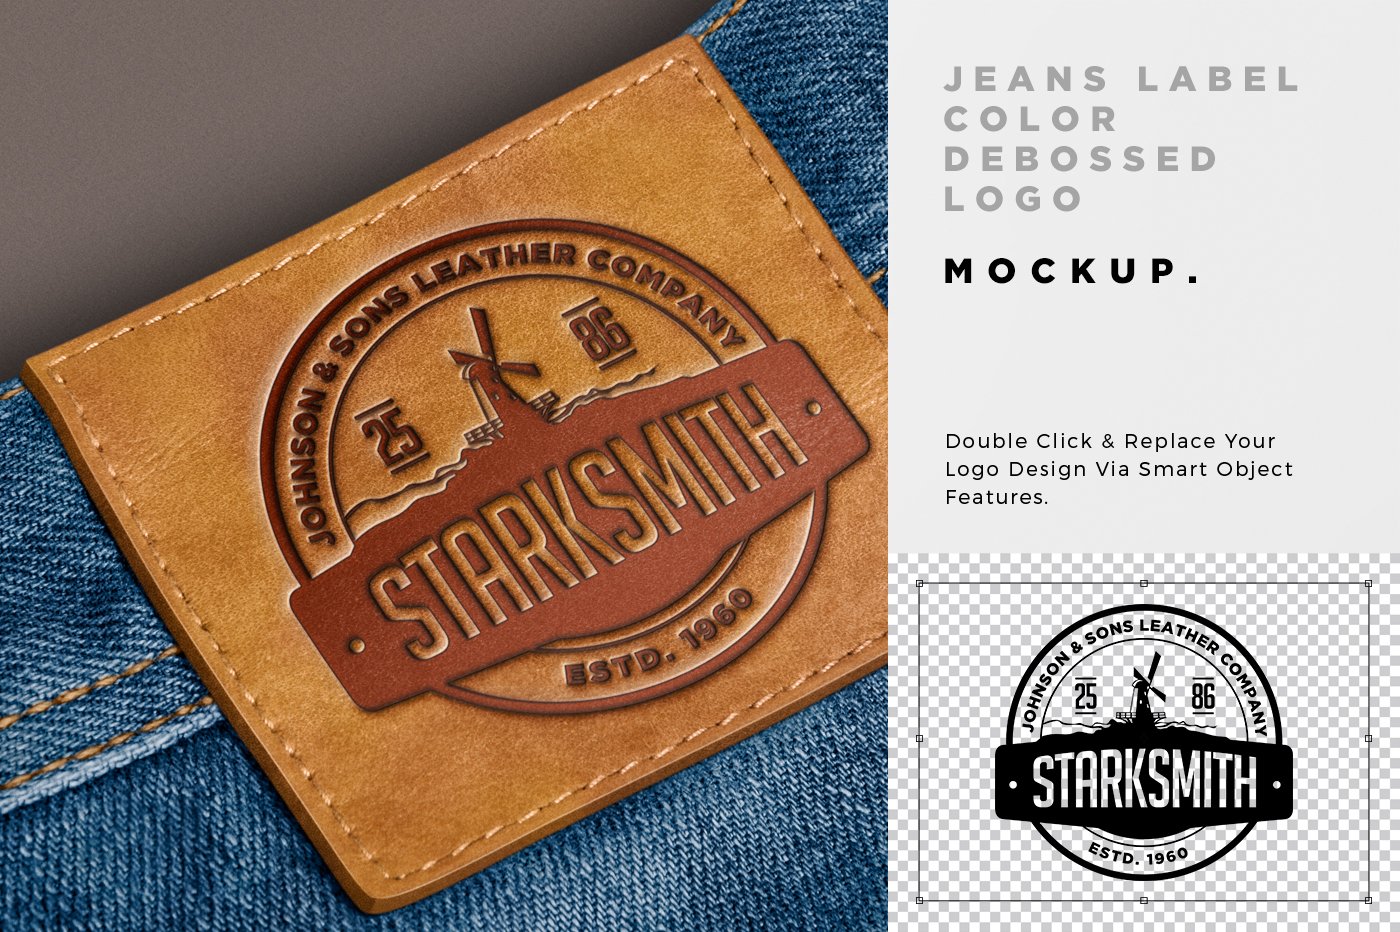 Debossed Jeans Label Mockup preview image.